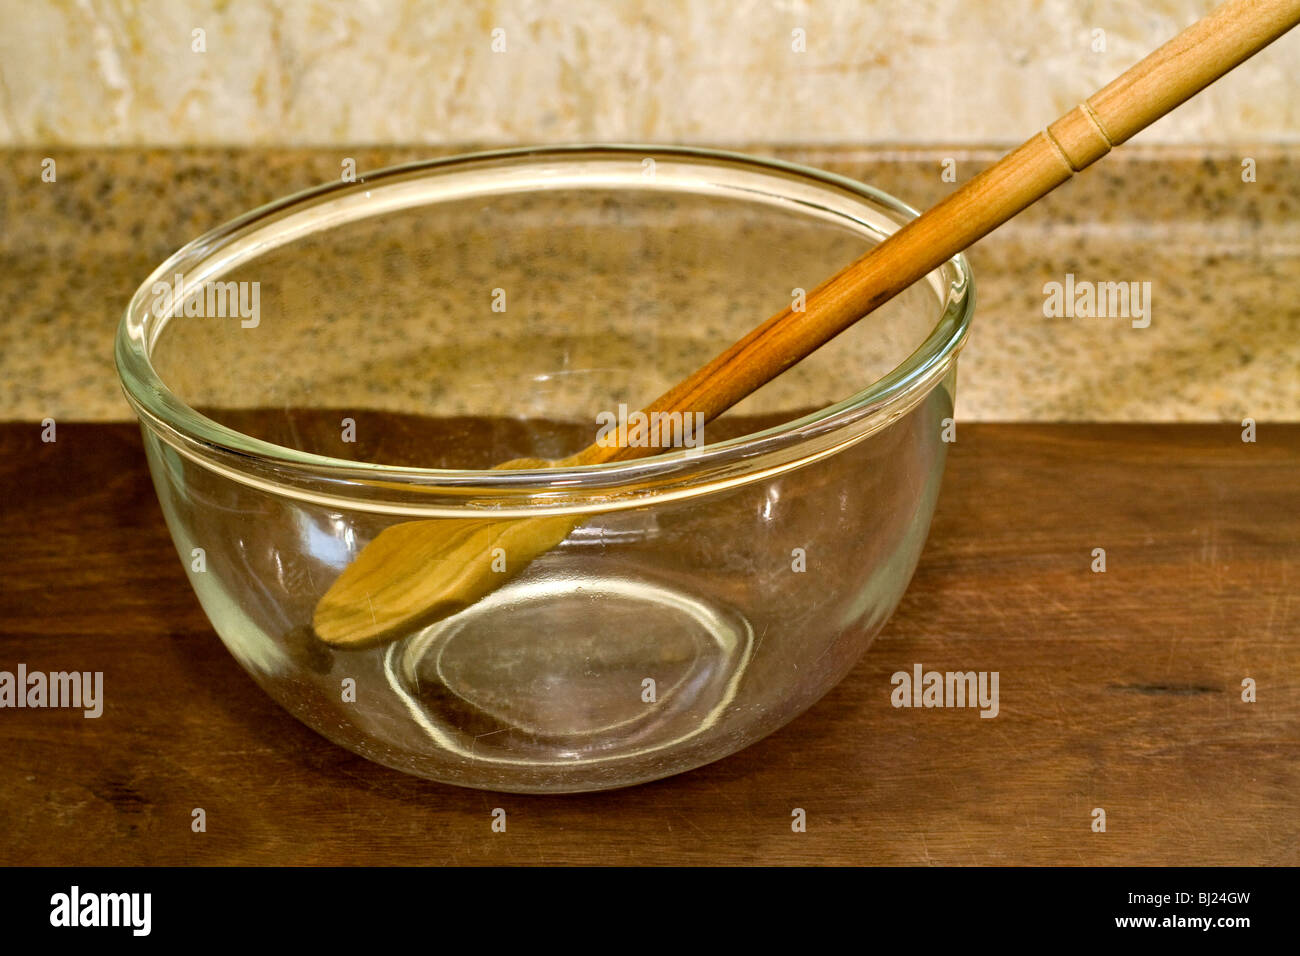 https://c8.alamy.com/comp/BJ24GW/wooden-spoon-in-a-large-glass-mixing-bowl-BJ24GW.jpg